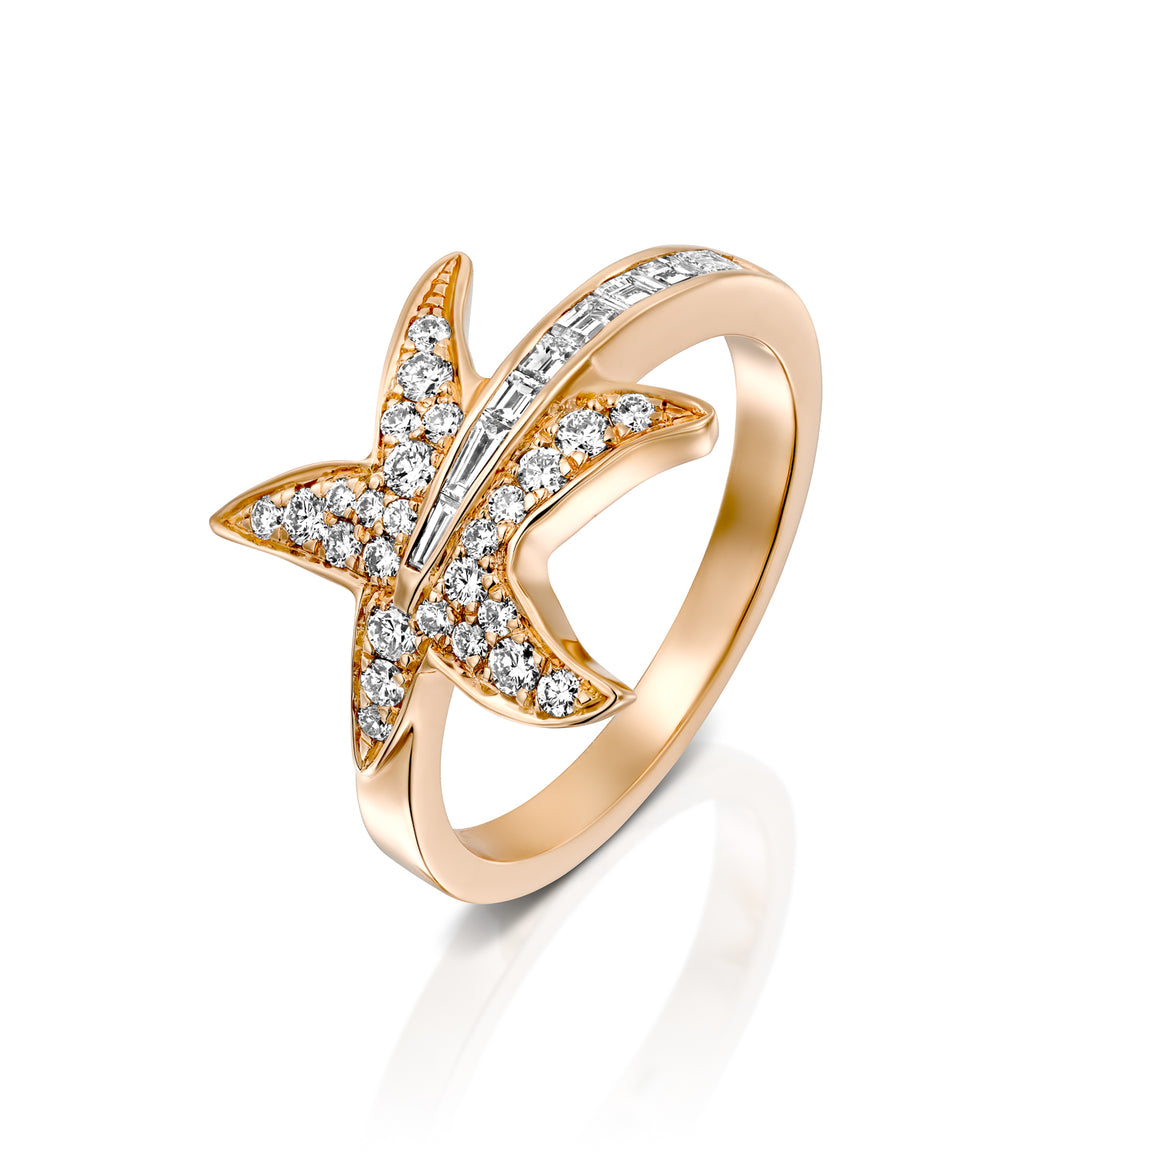 ROLSF01-Tropicana diamond ring 18k Gold